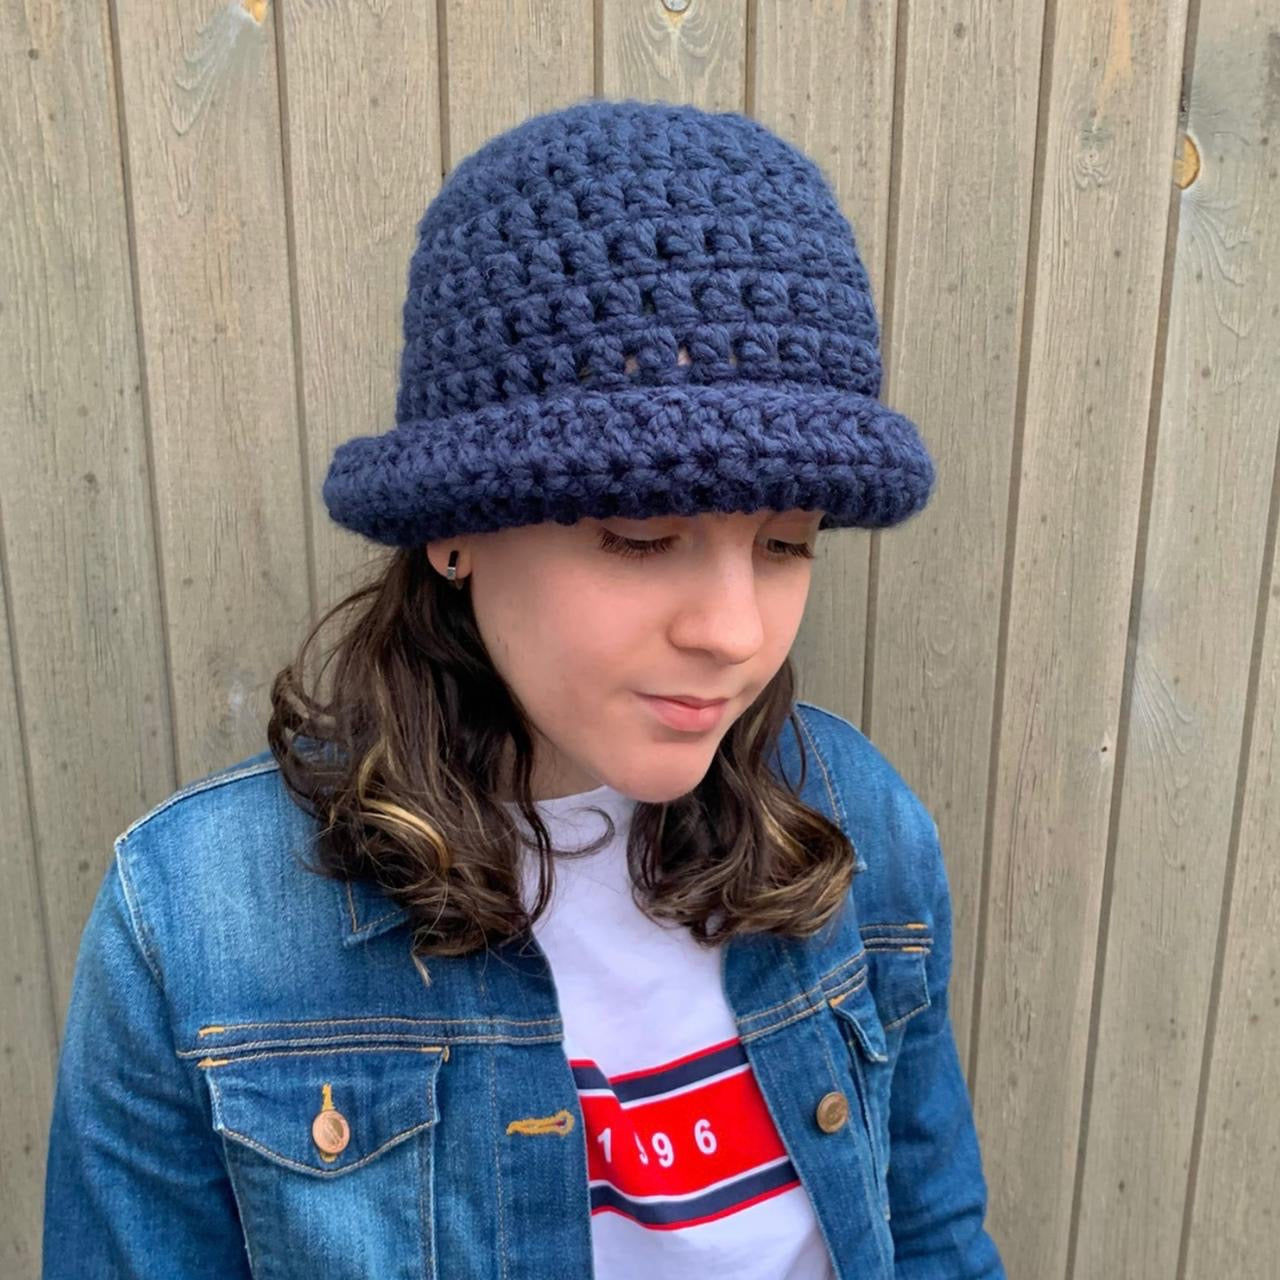 Handmade navy blue chunky crochet bowler hat